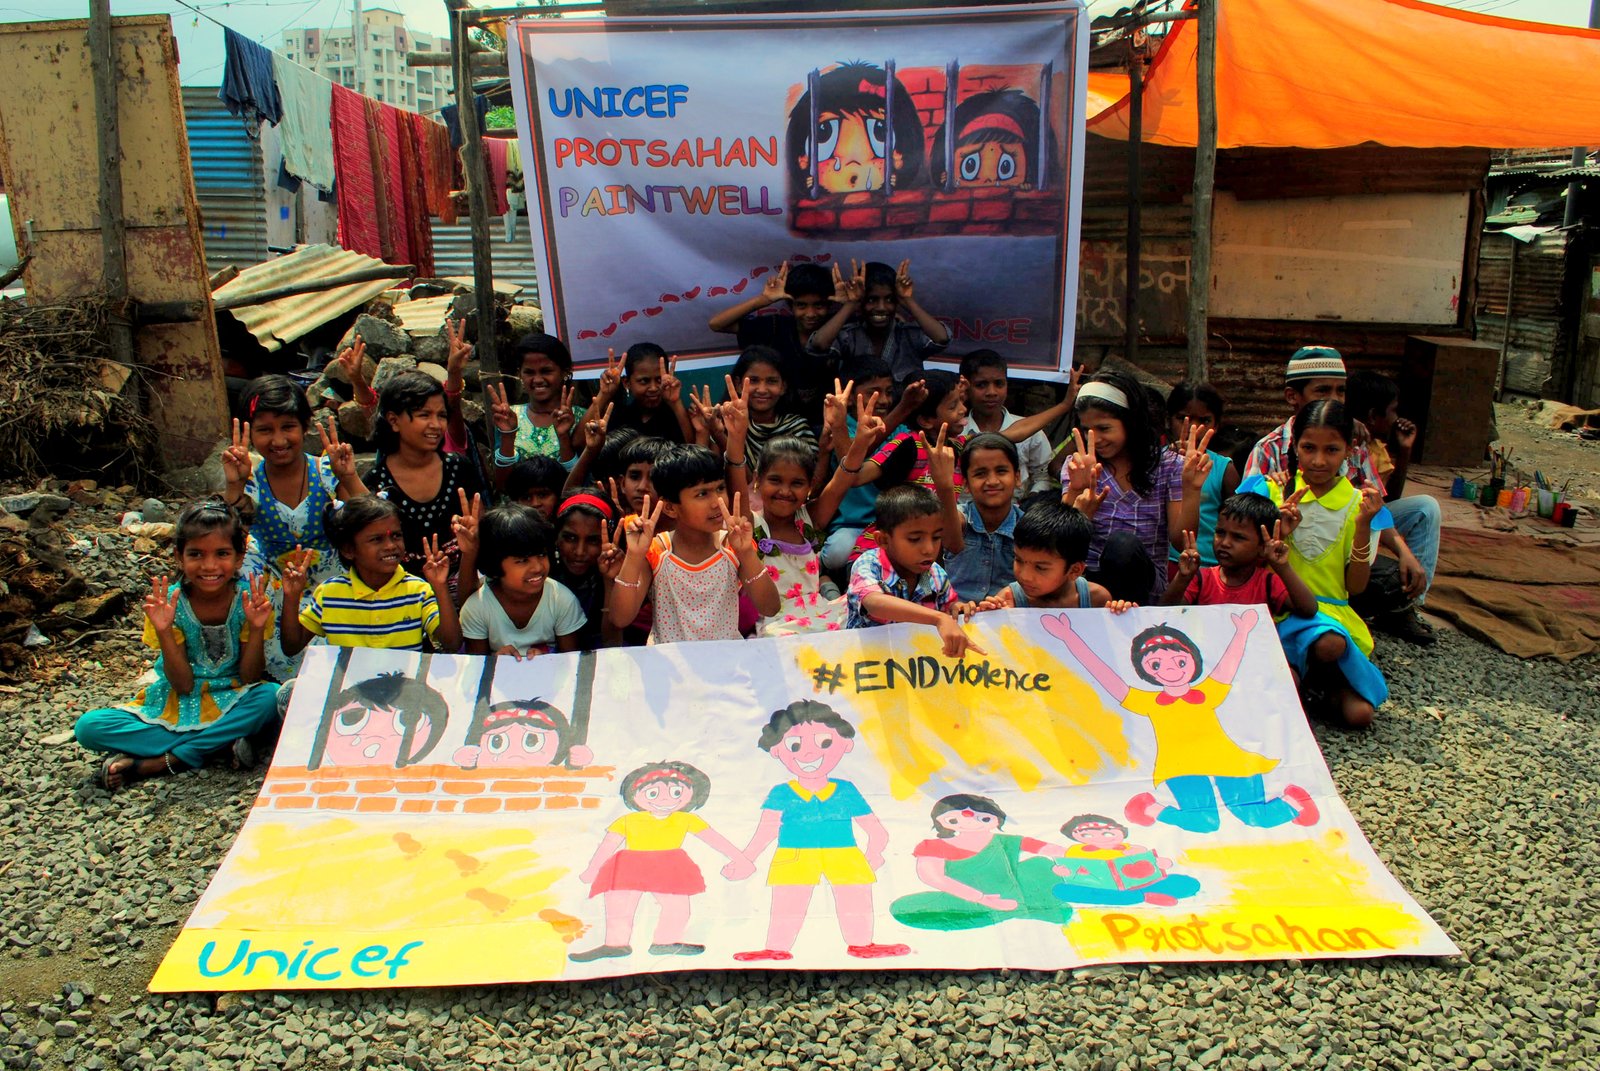 Pune - Children from Gosavi slum got together to paint a #ENDViolence Banner